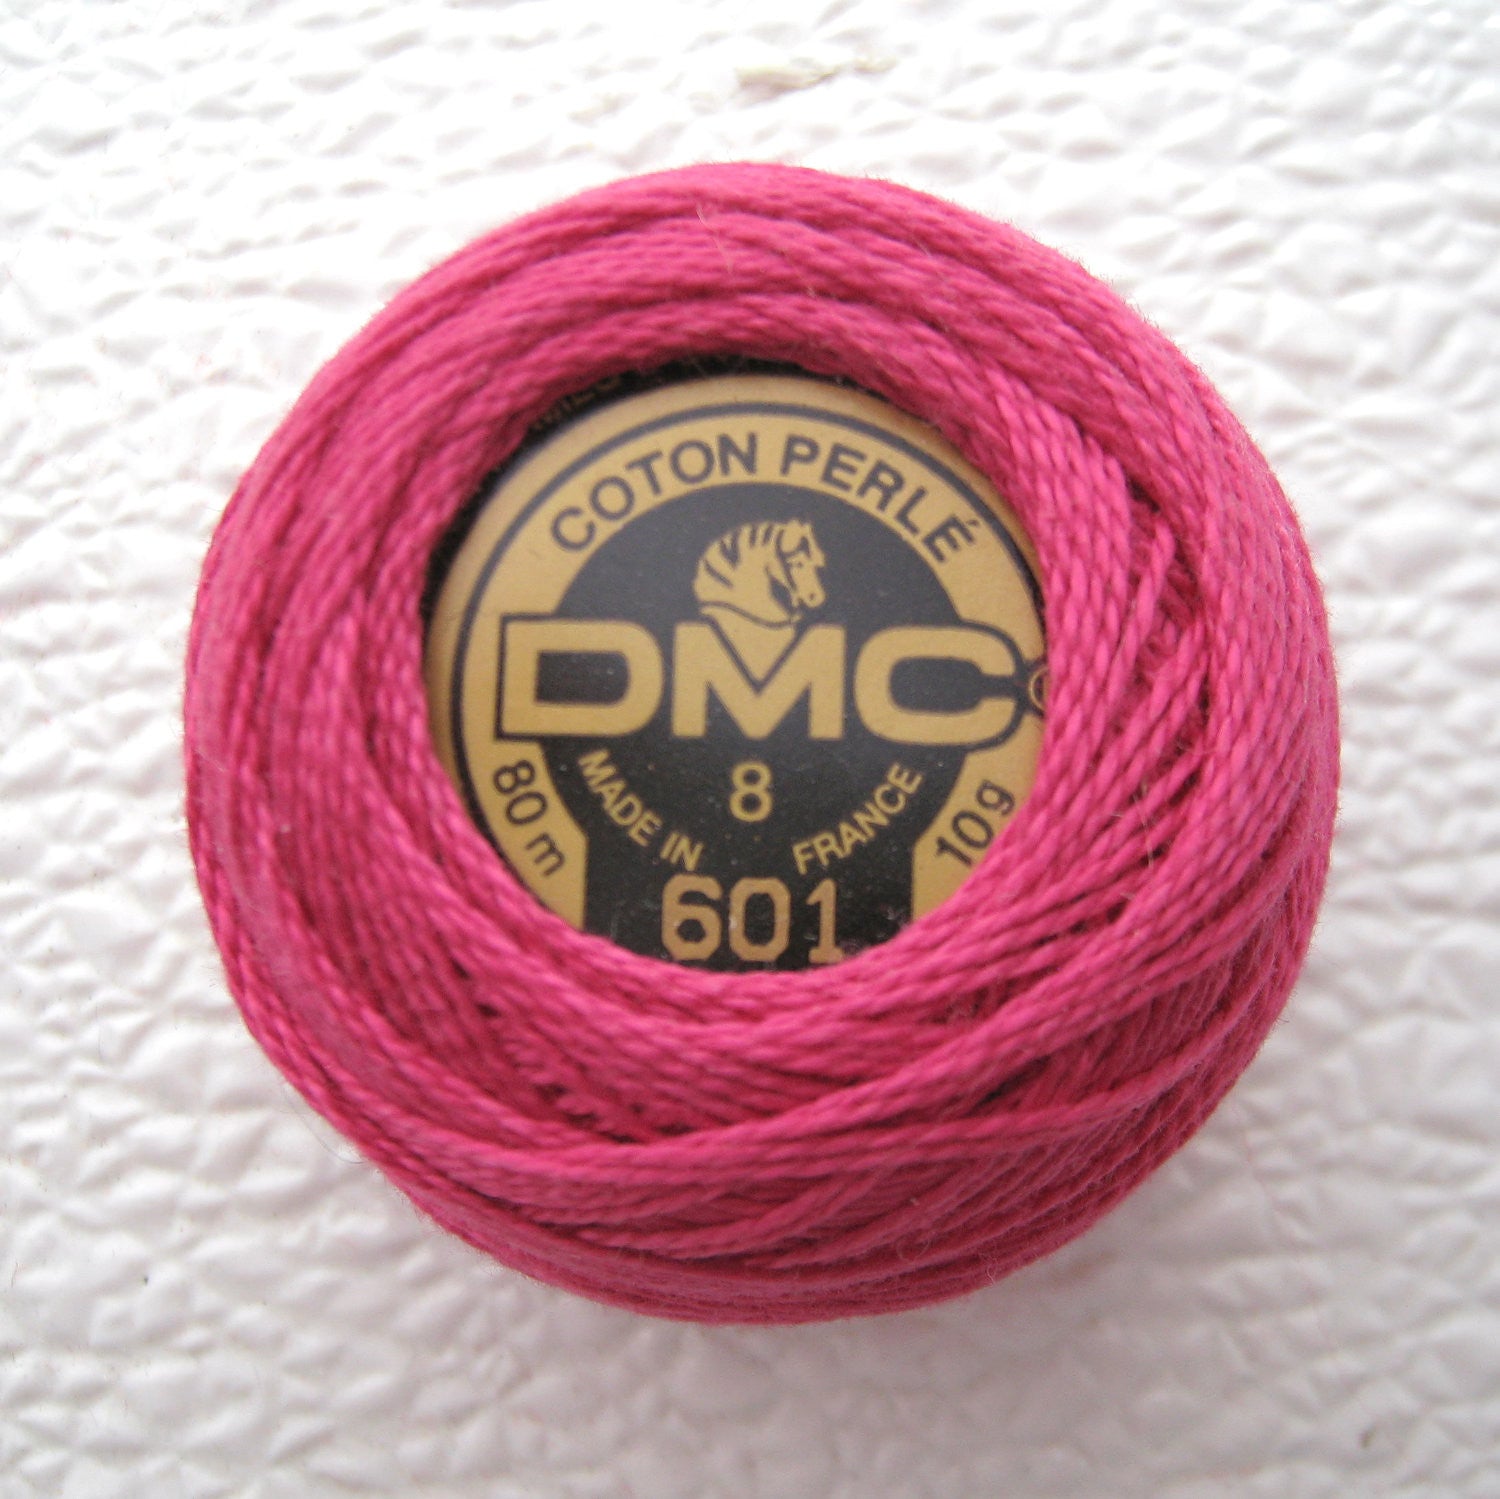 DMC #8 Perle Cotton – The Stitcher's Muse Needleart